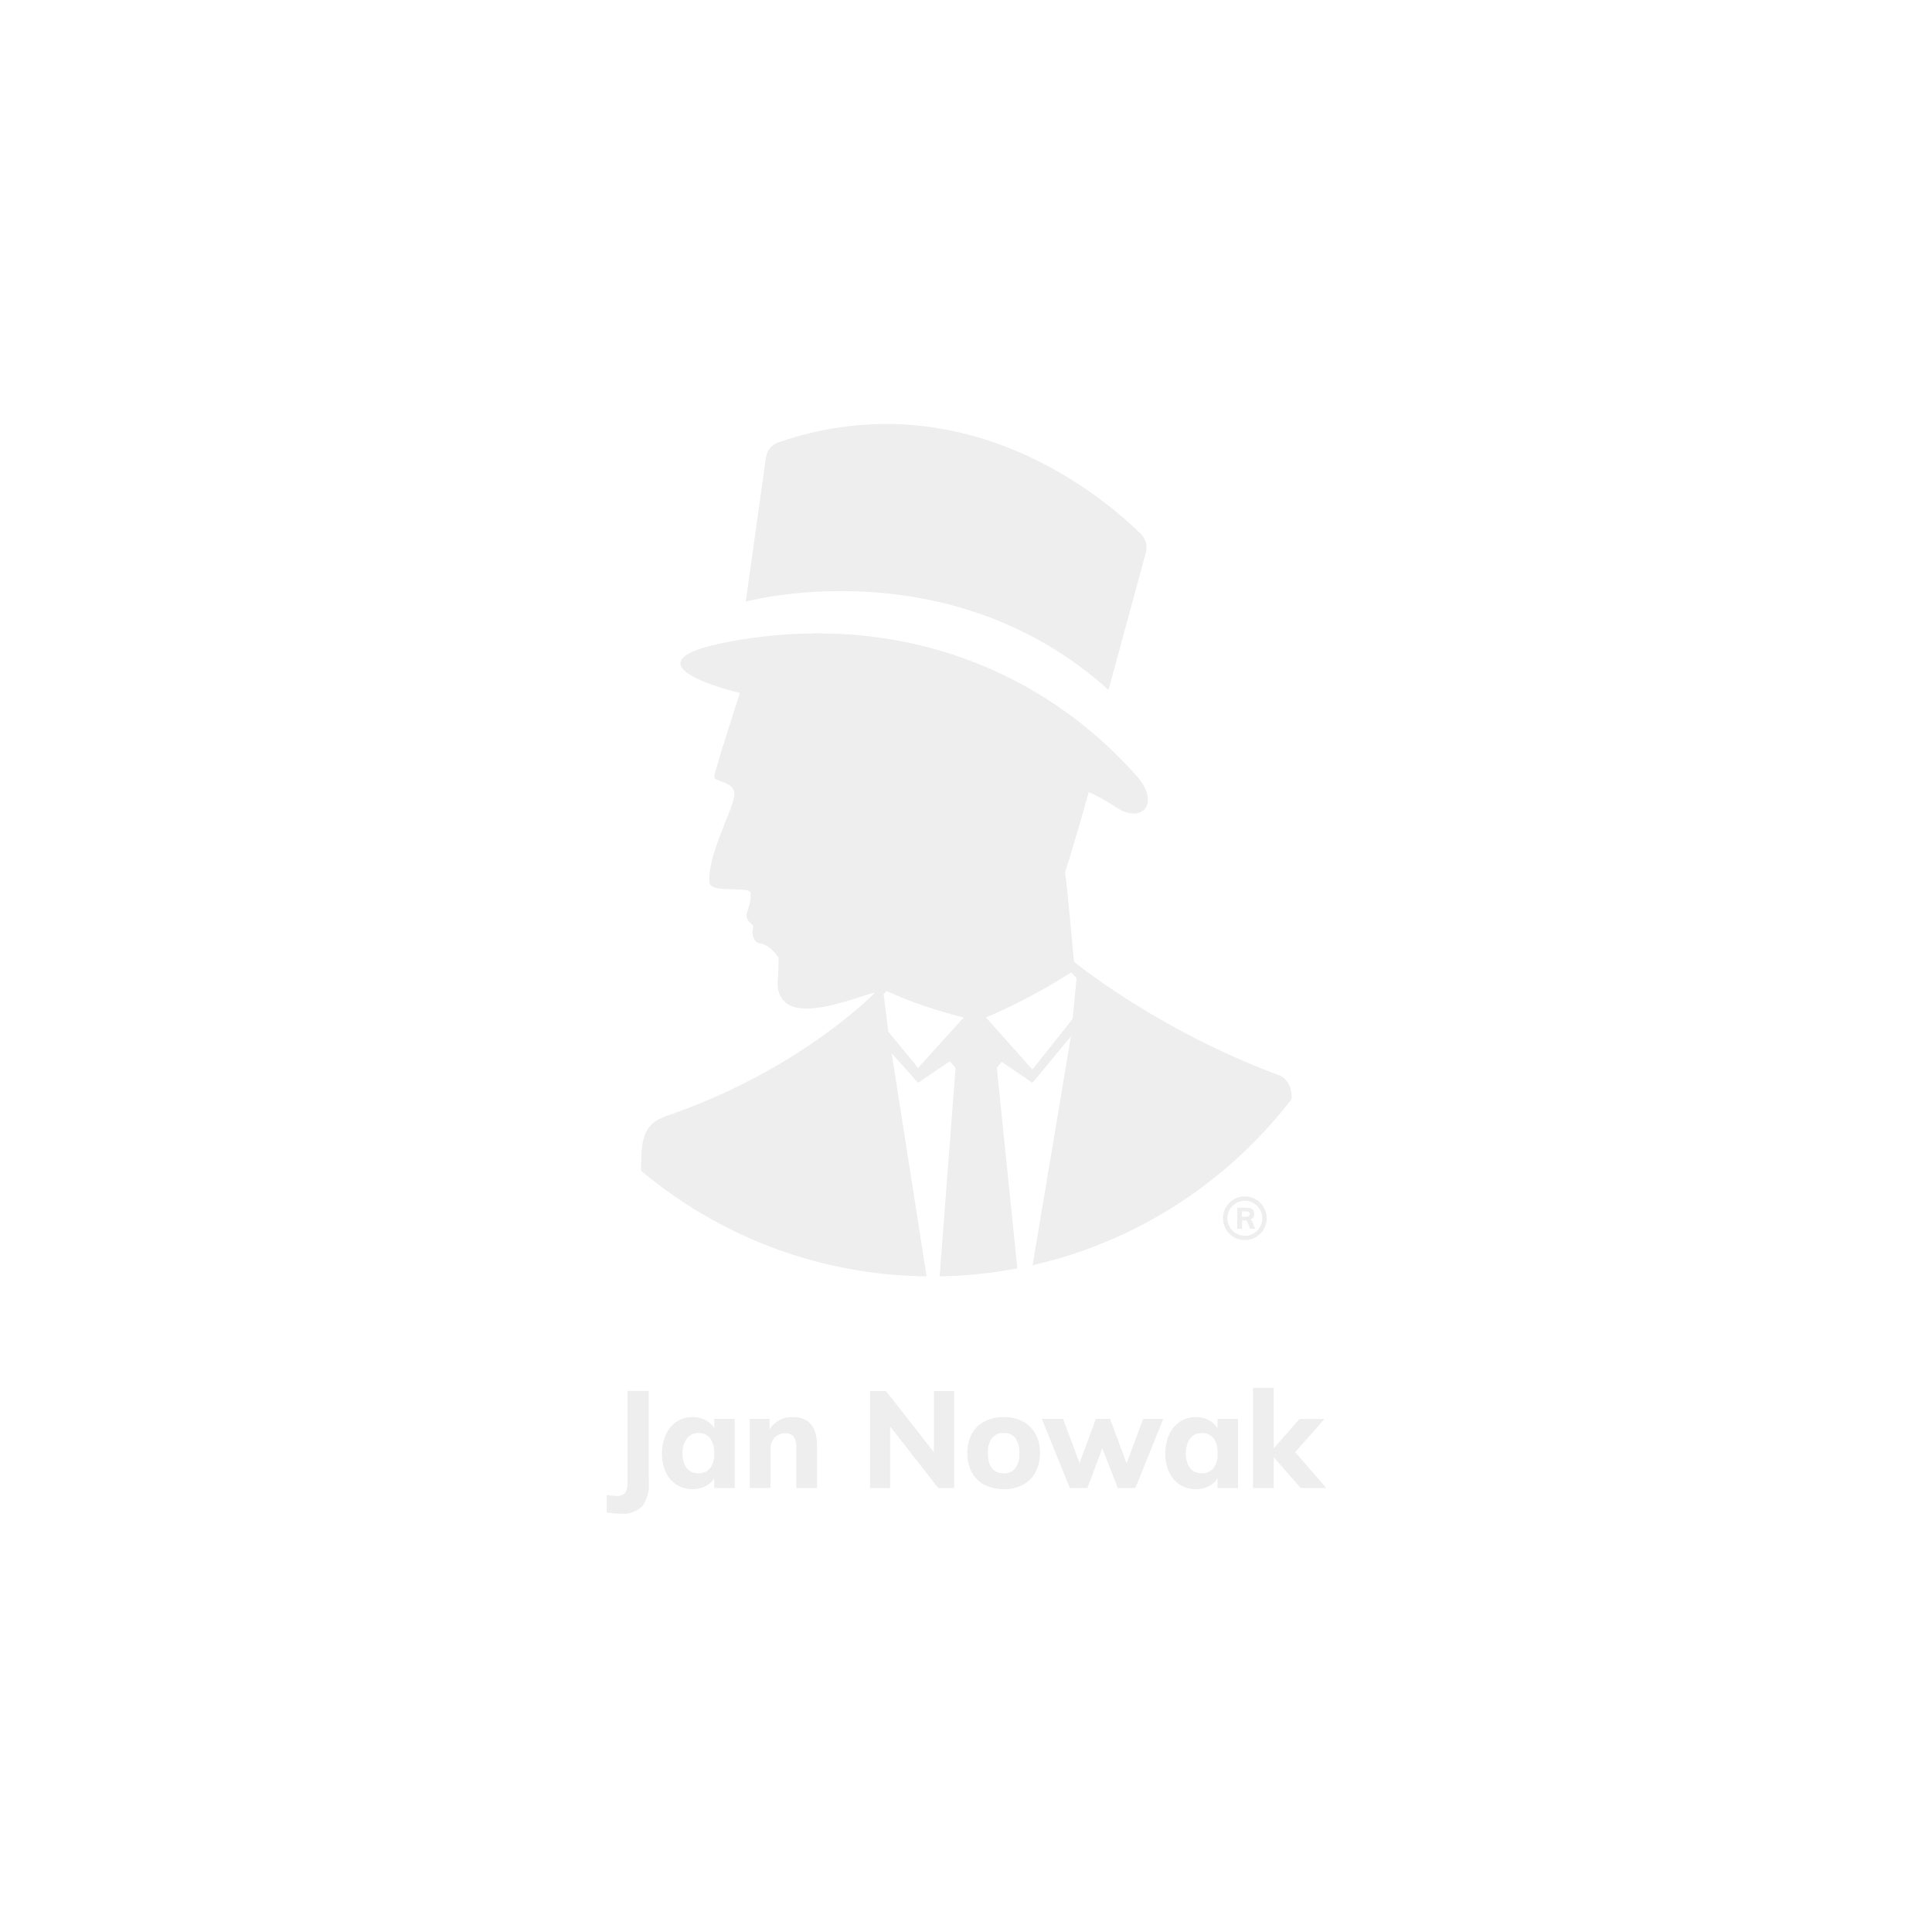 Jan Nowak model LENA 900x900x400 biurowa szafa metalowa na akta z szufladami szara